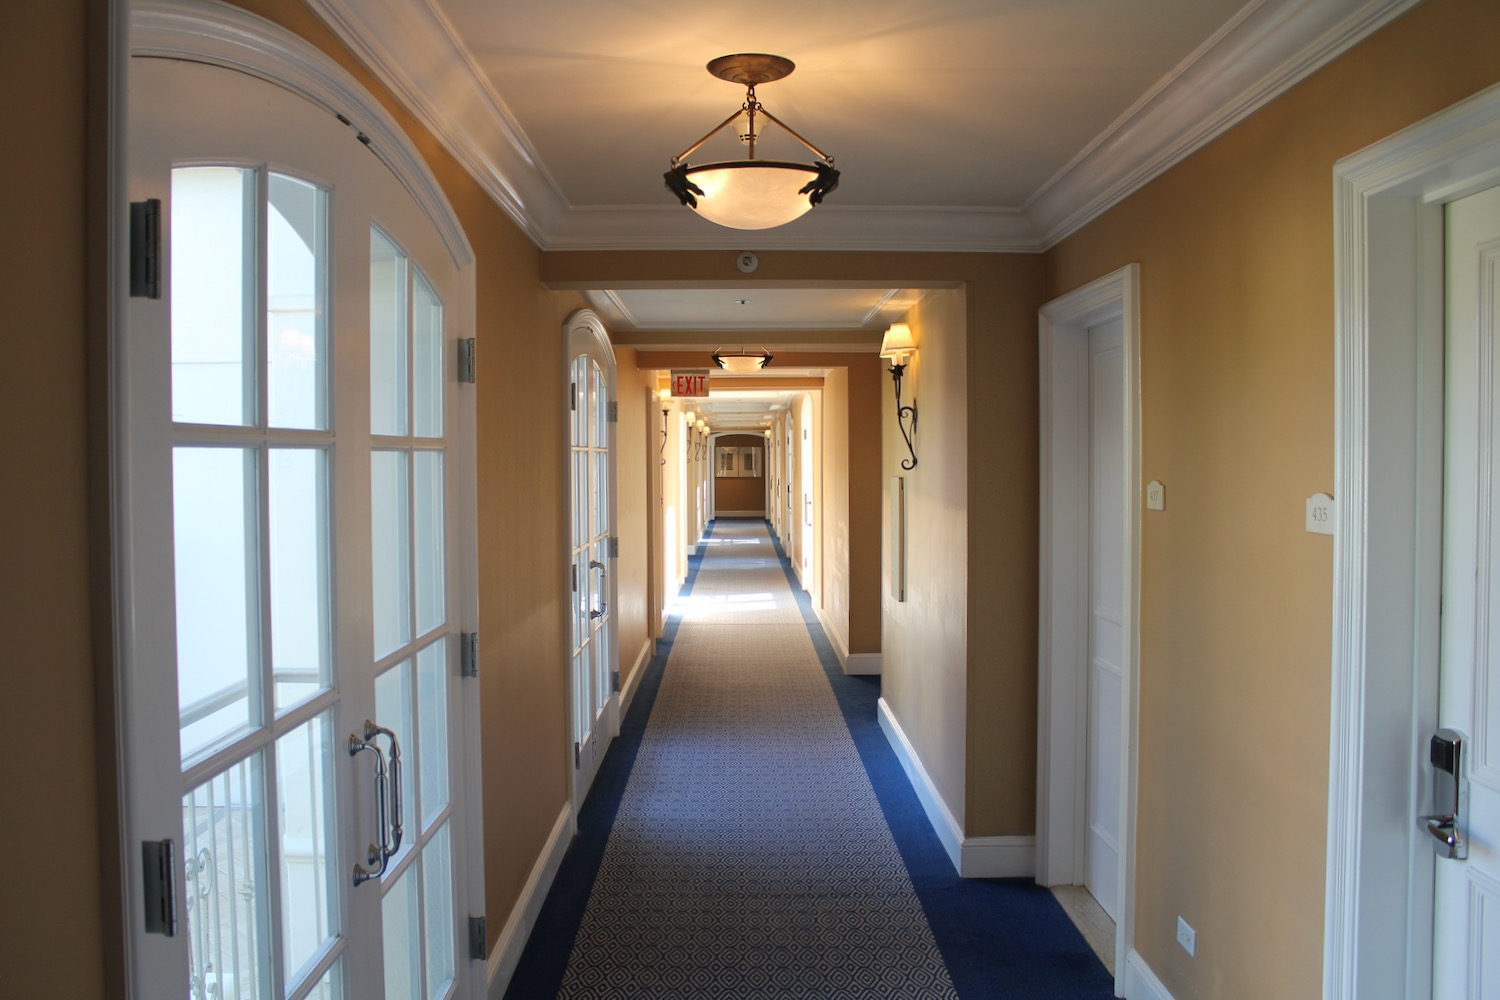 a long hallway with a light fixture